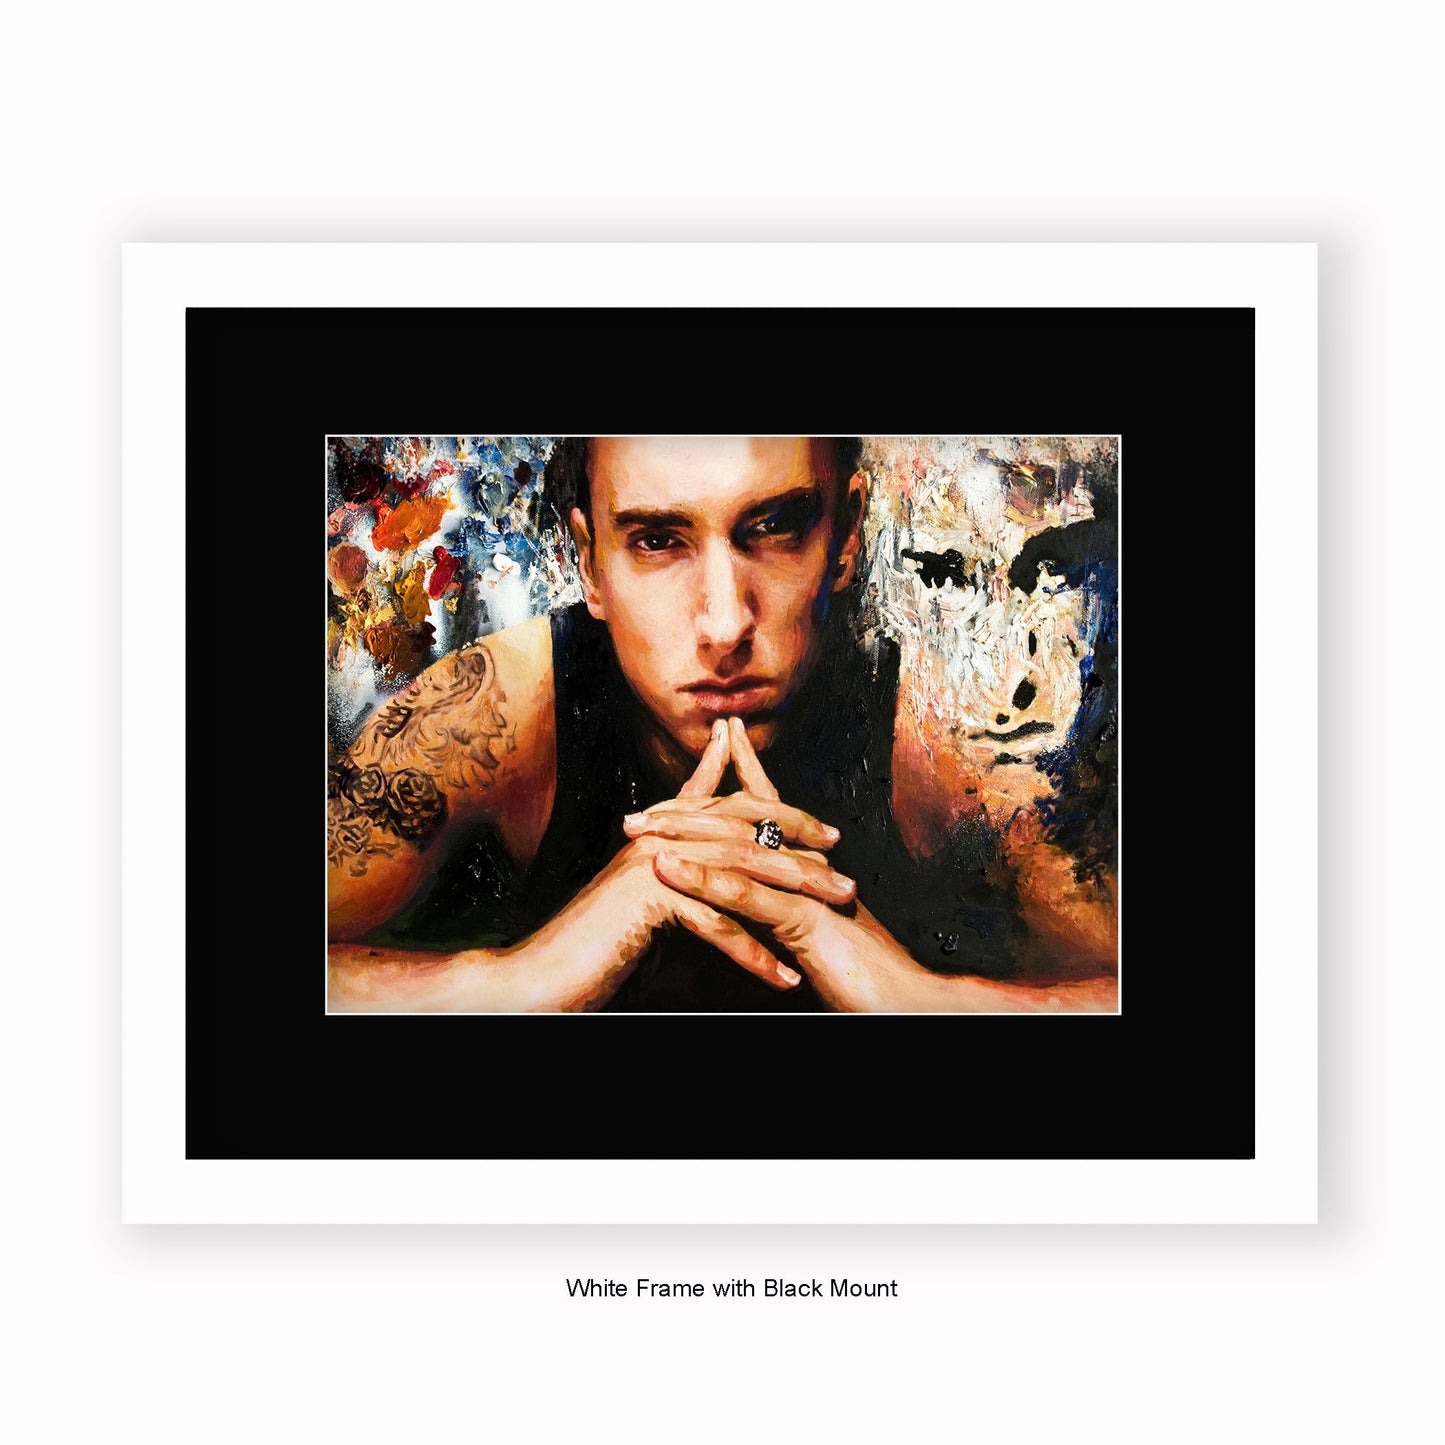 Eminem - Mounted & Framed Art Print